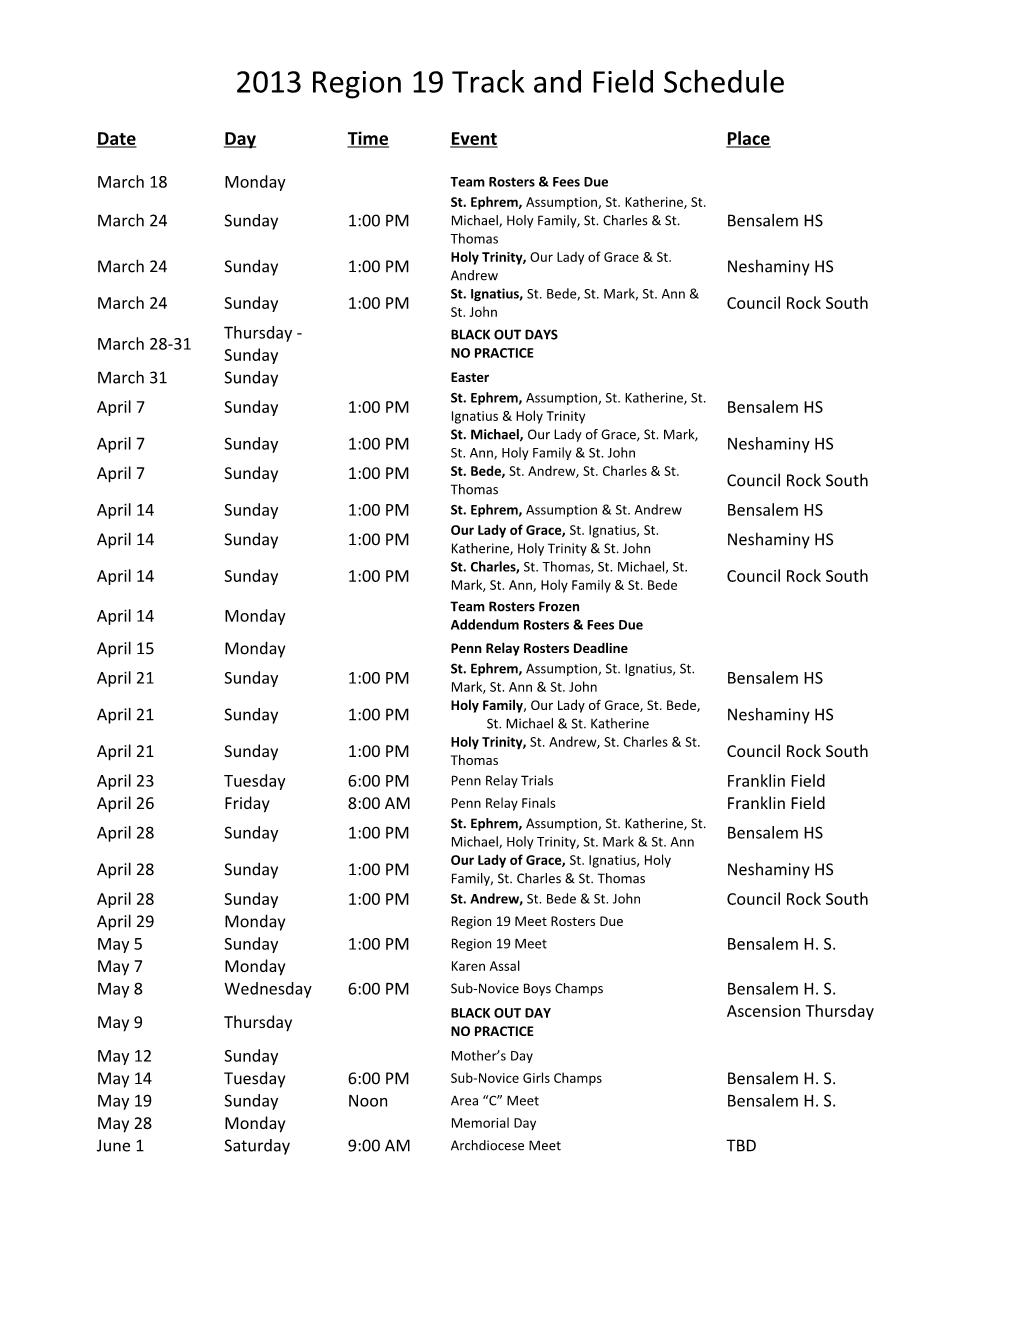 2004 Region 19 Track and Field Schedule